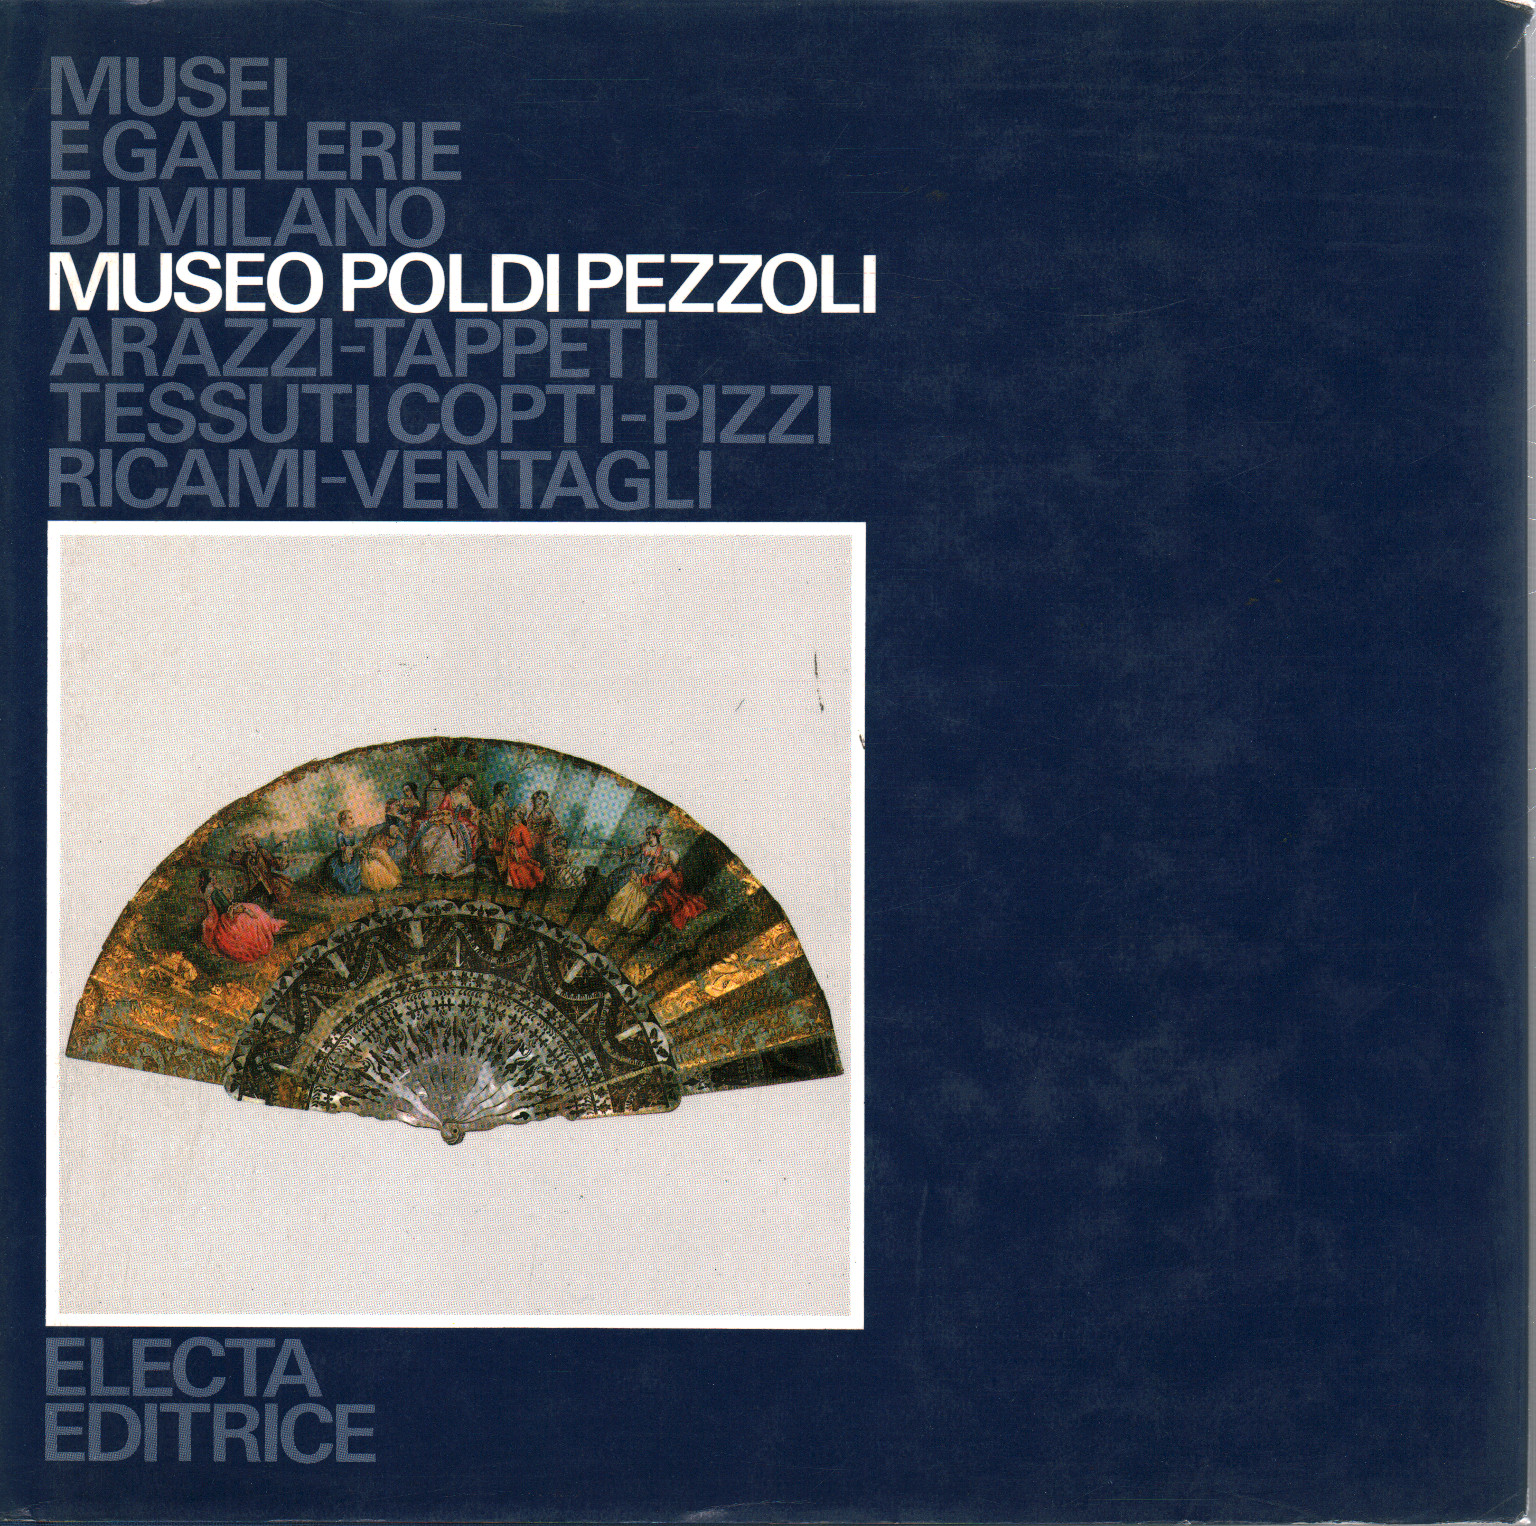 Museo Poldi Pezzoli, s.a.